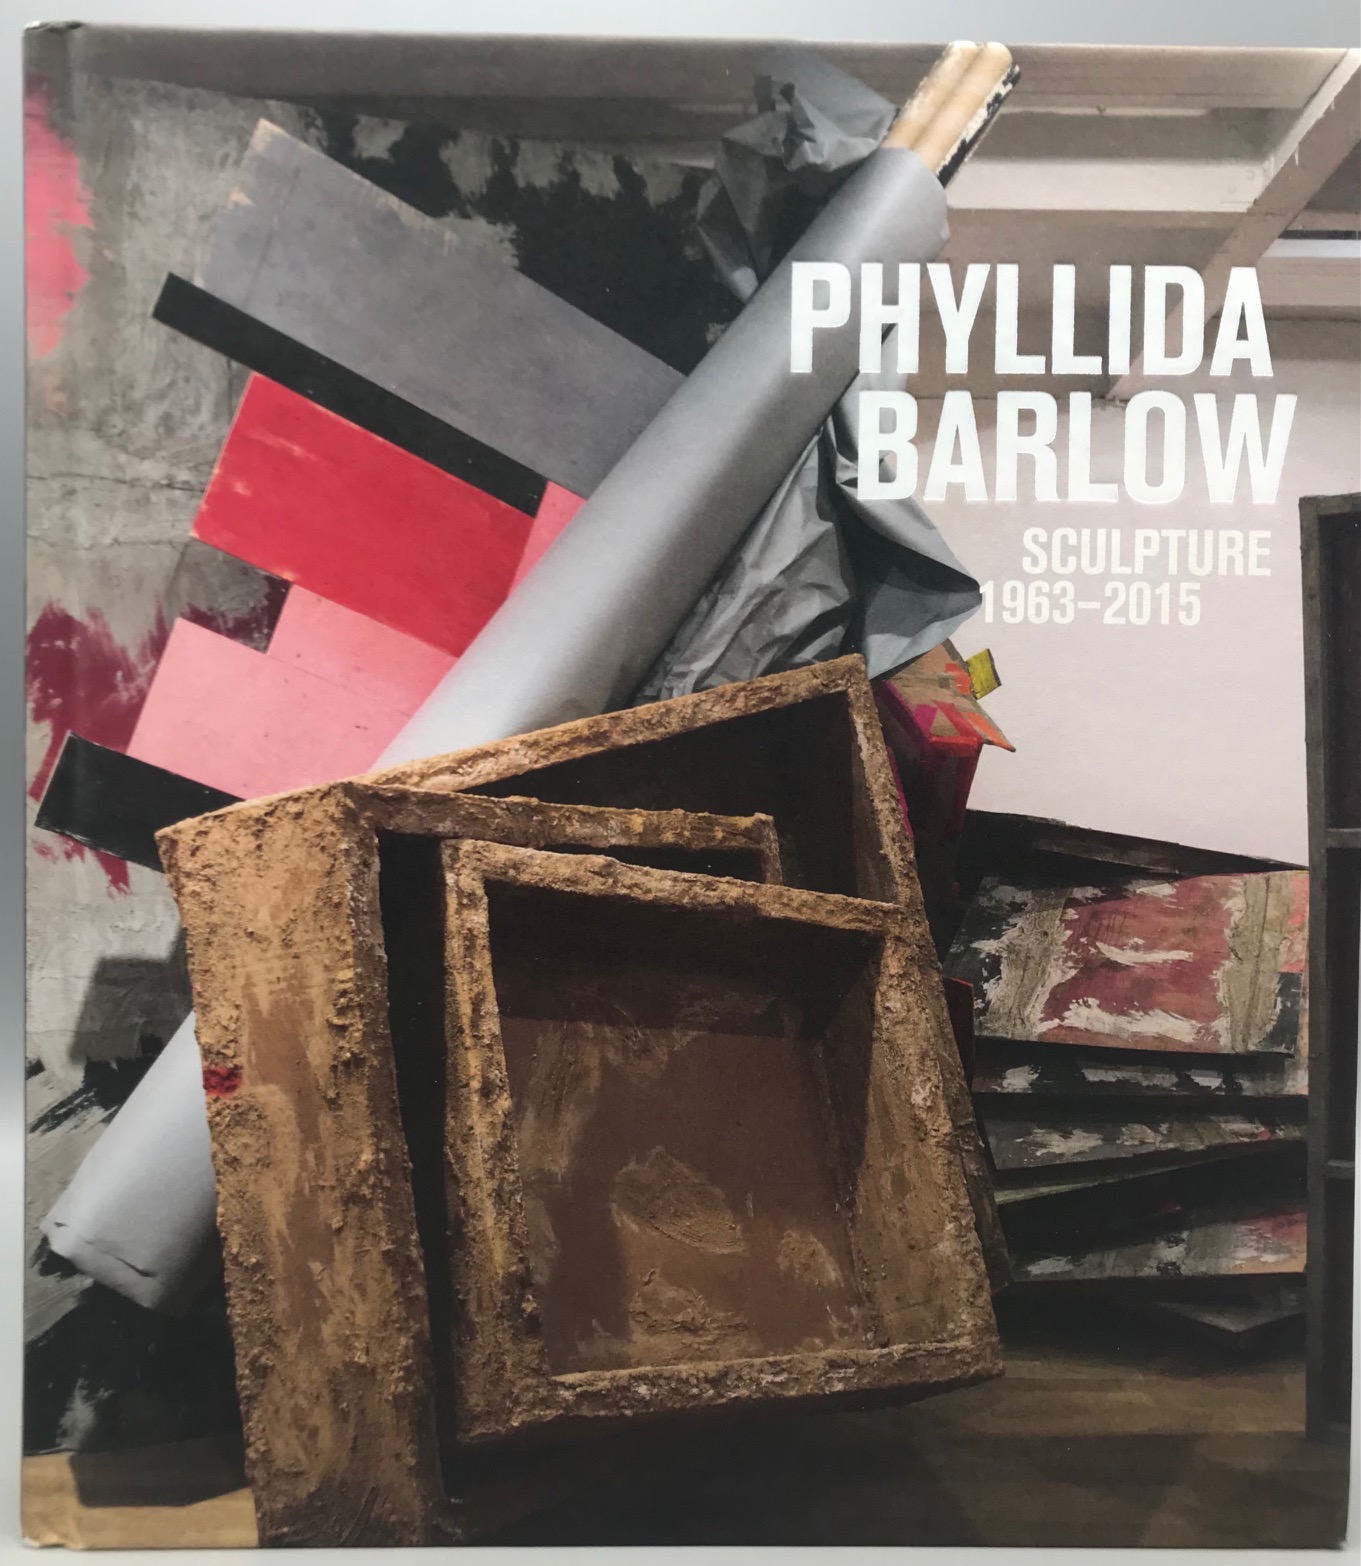 PHYLLIDA BARLOW: SCULPTURE 1963-2015, by Frances Morris and Phyllida Barlow - 2015 [Catalogue]